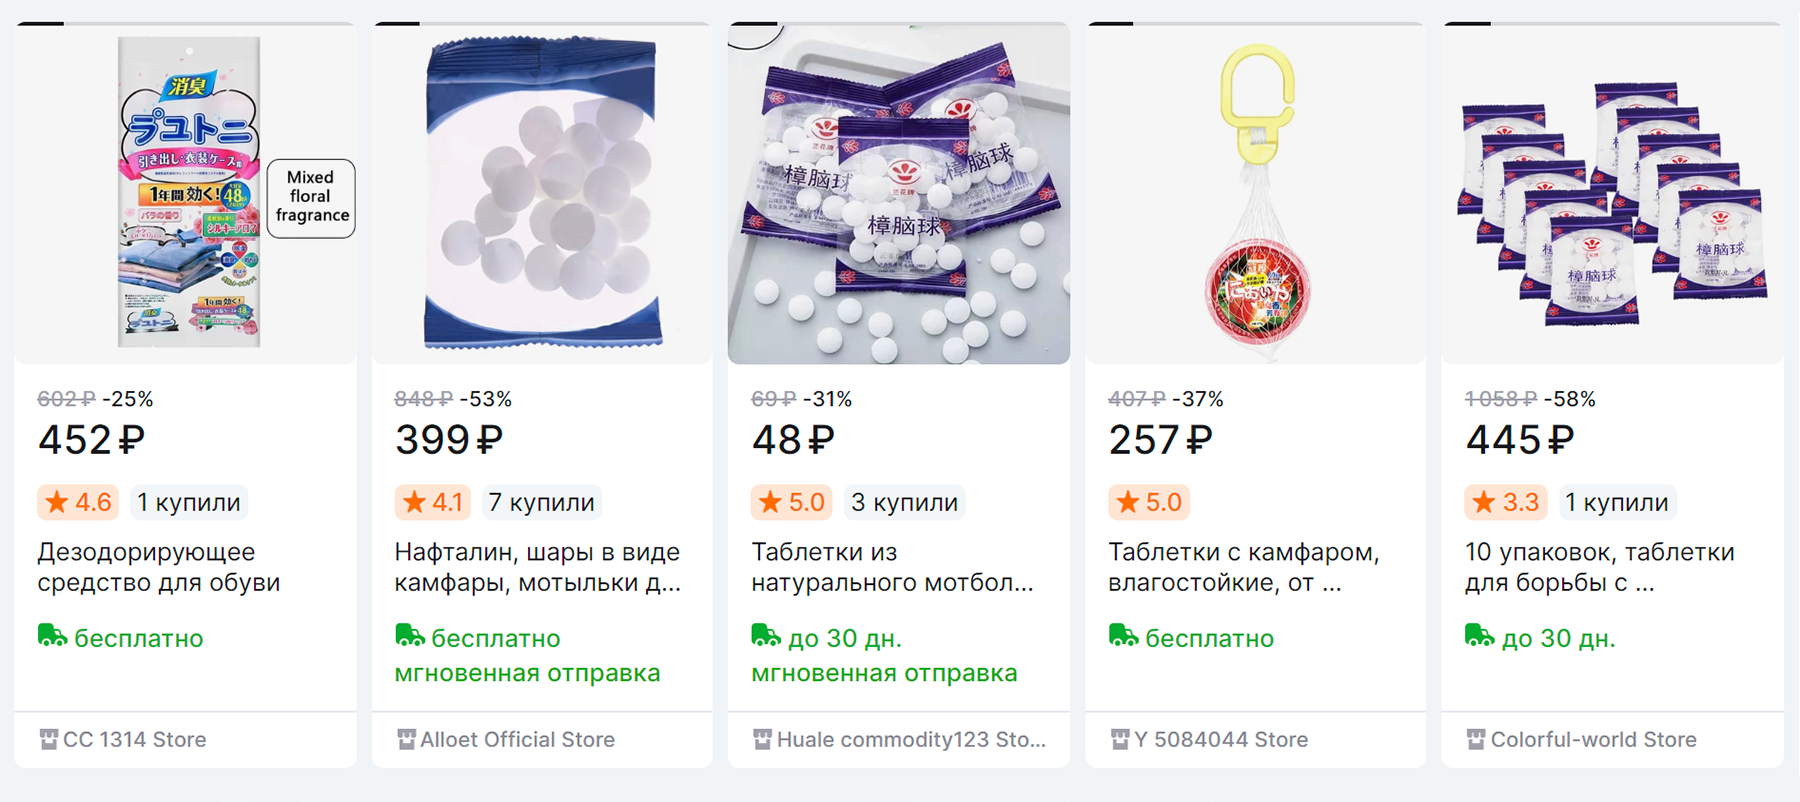 Таблетки камфоры на «Алиэкспрессе». Источник: aliexpress.ru